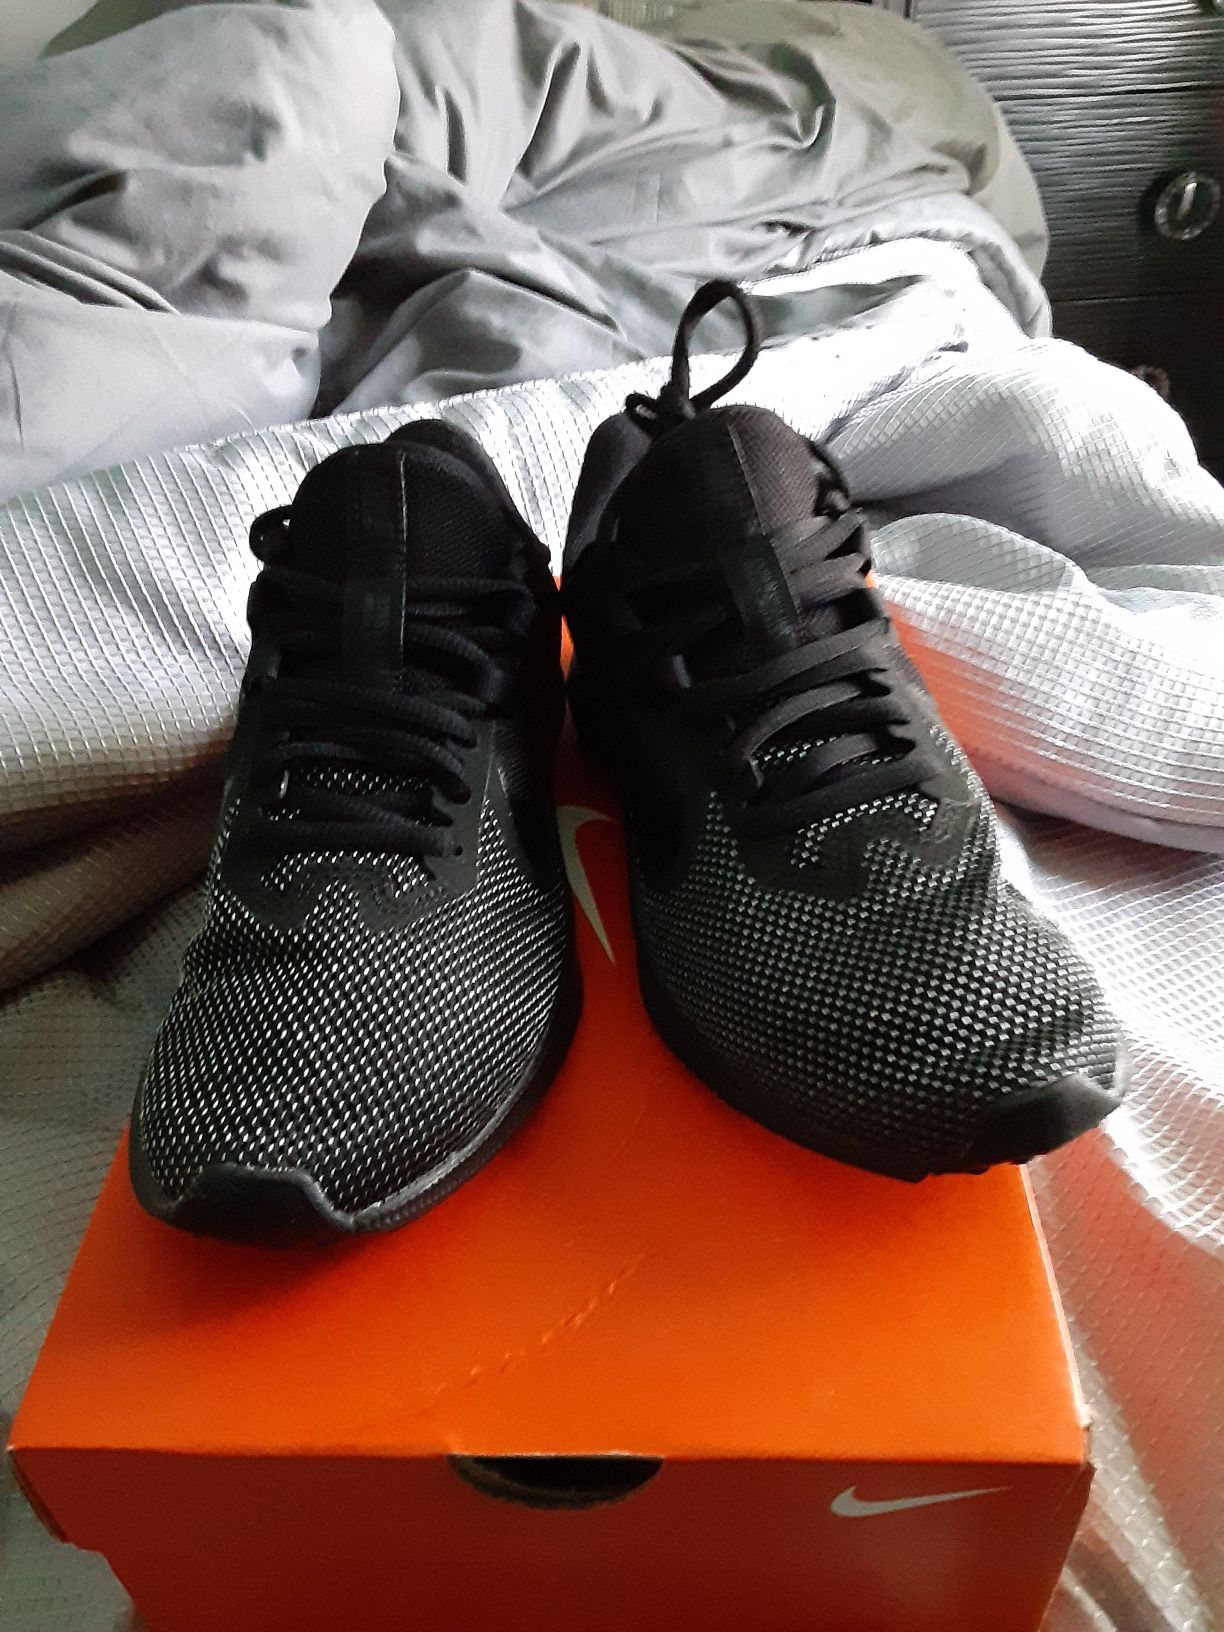 Nike shoes 6.5